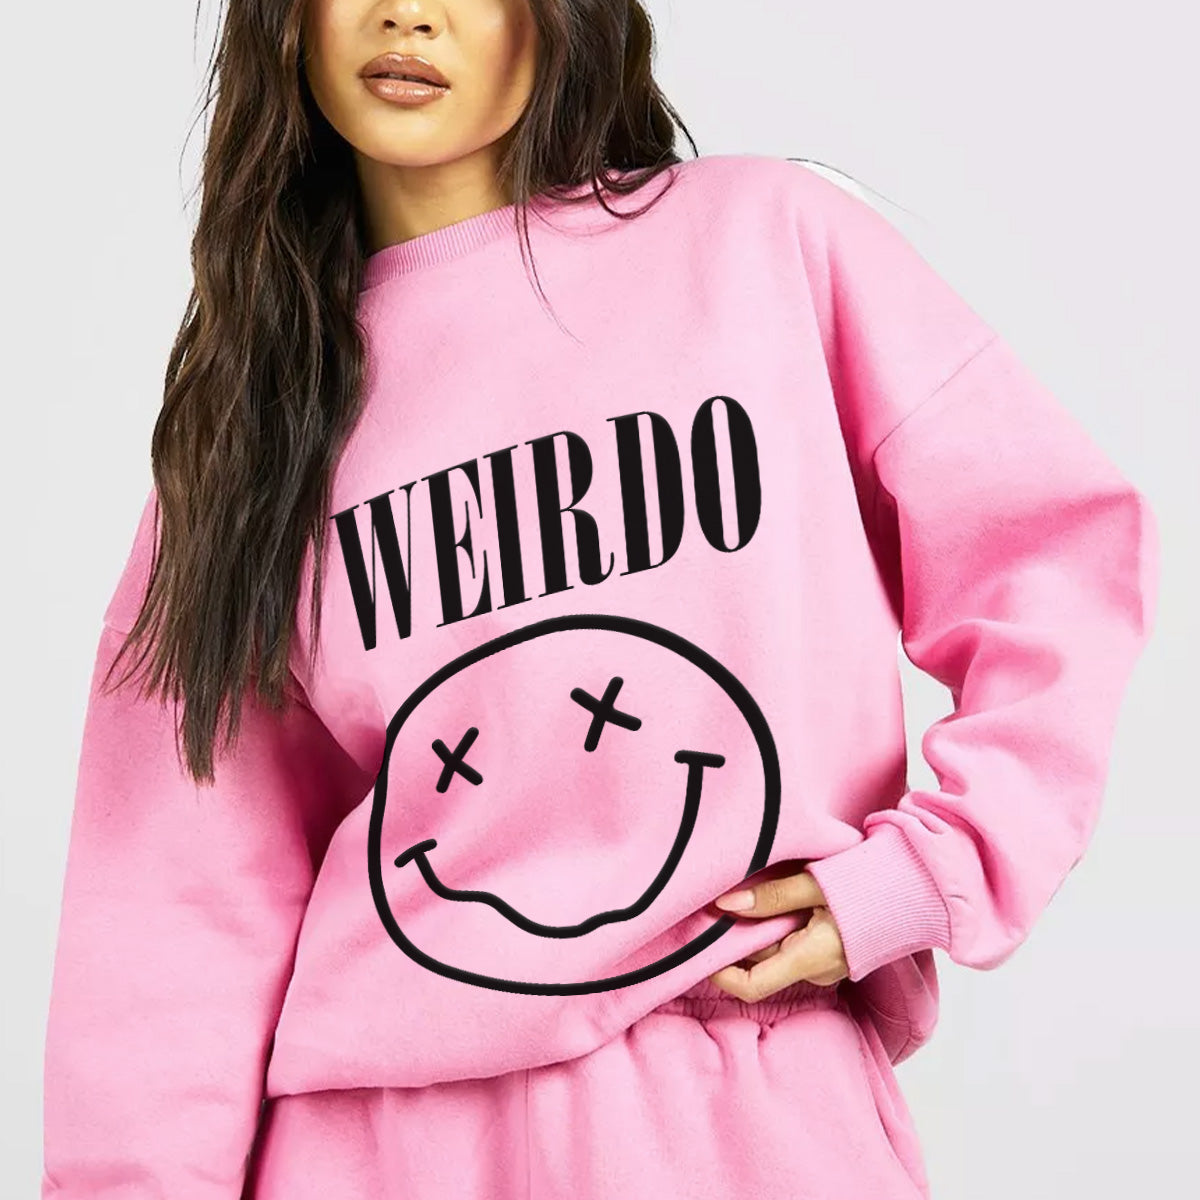 Weirdo Smiley Face Sweatshirt - Pink